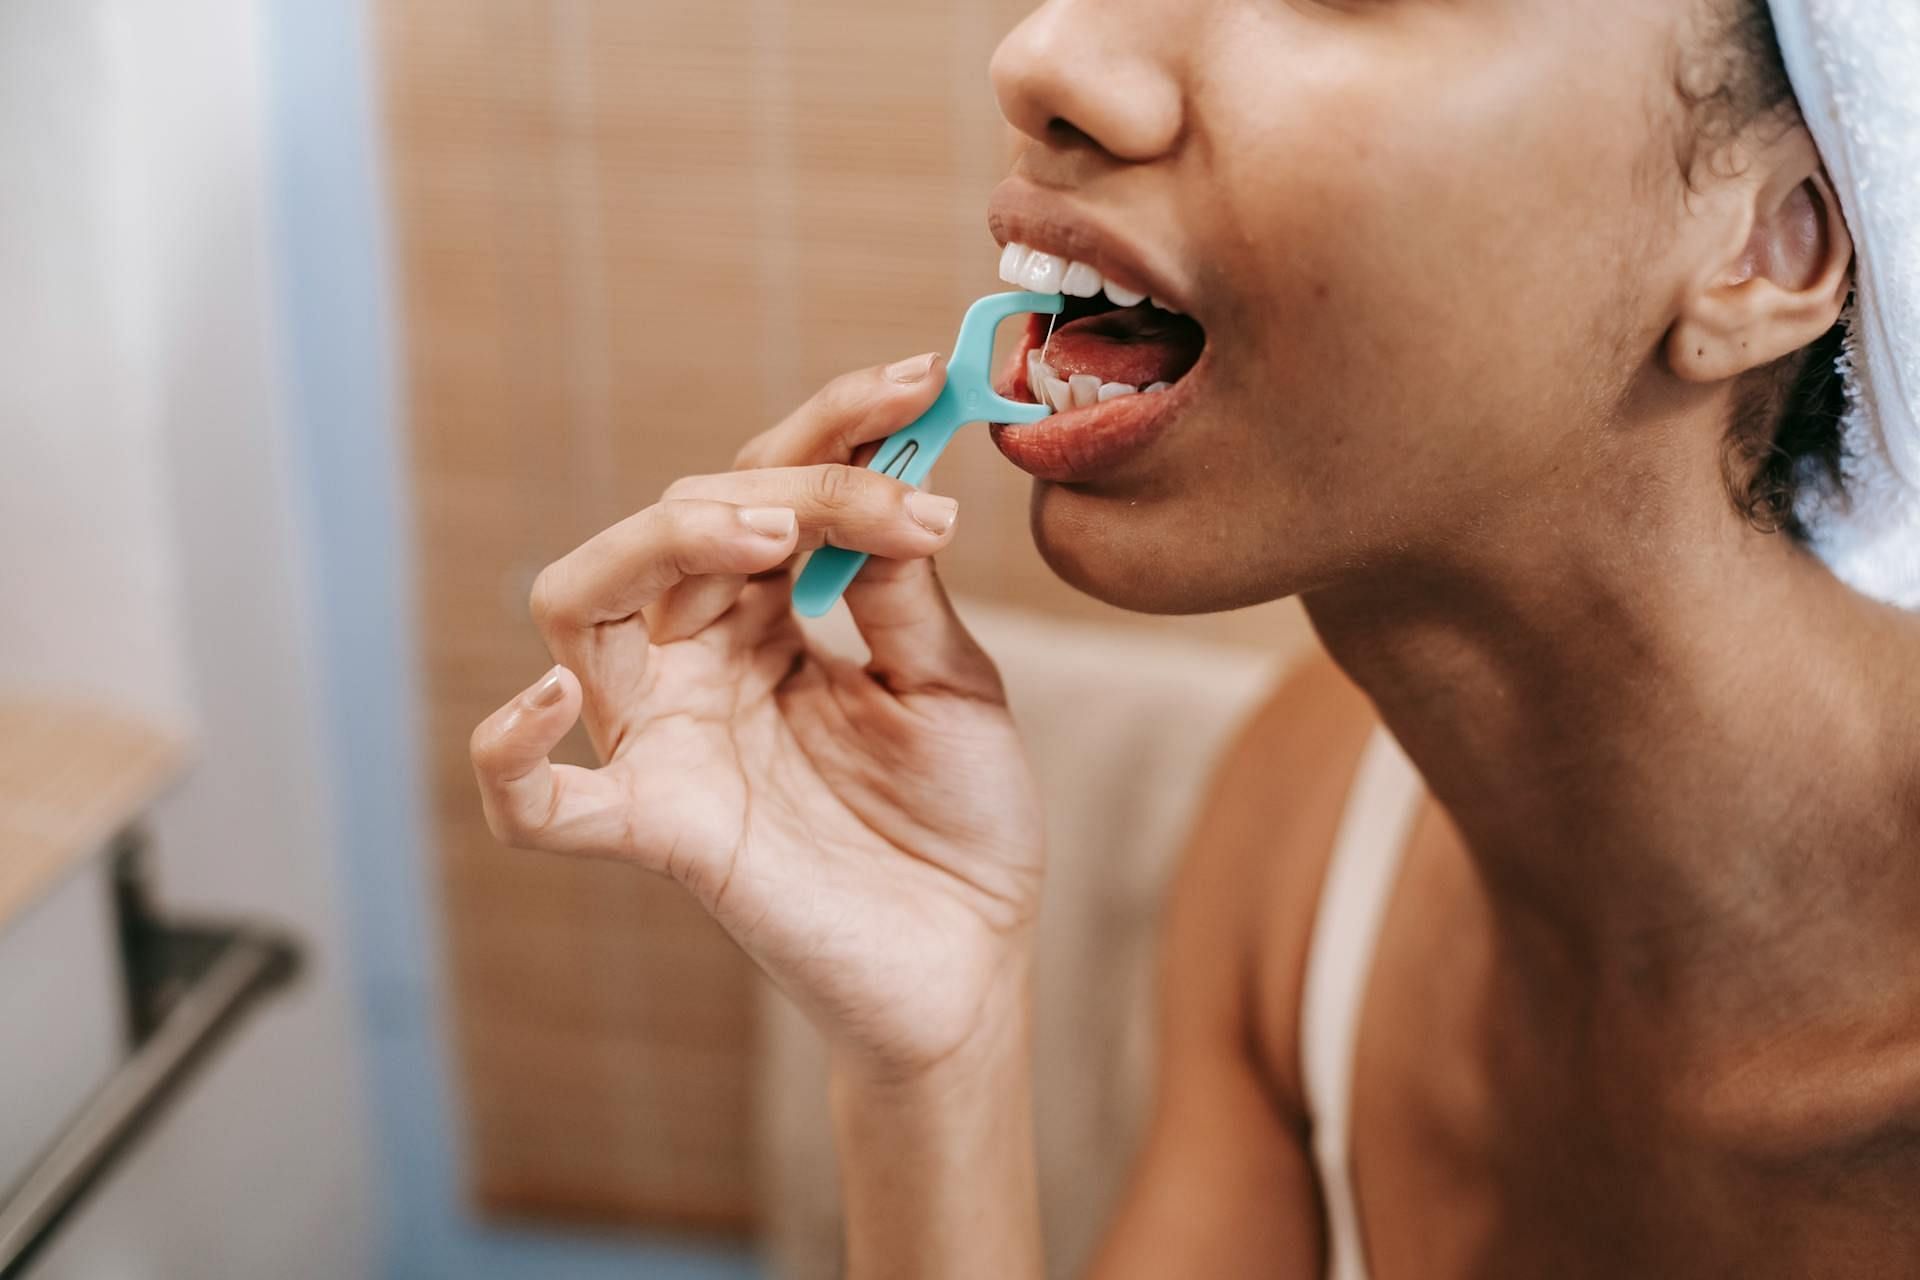 Floss your teeth at least once a day. (Image via Pexels/Sora Shimazaki)